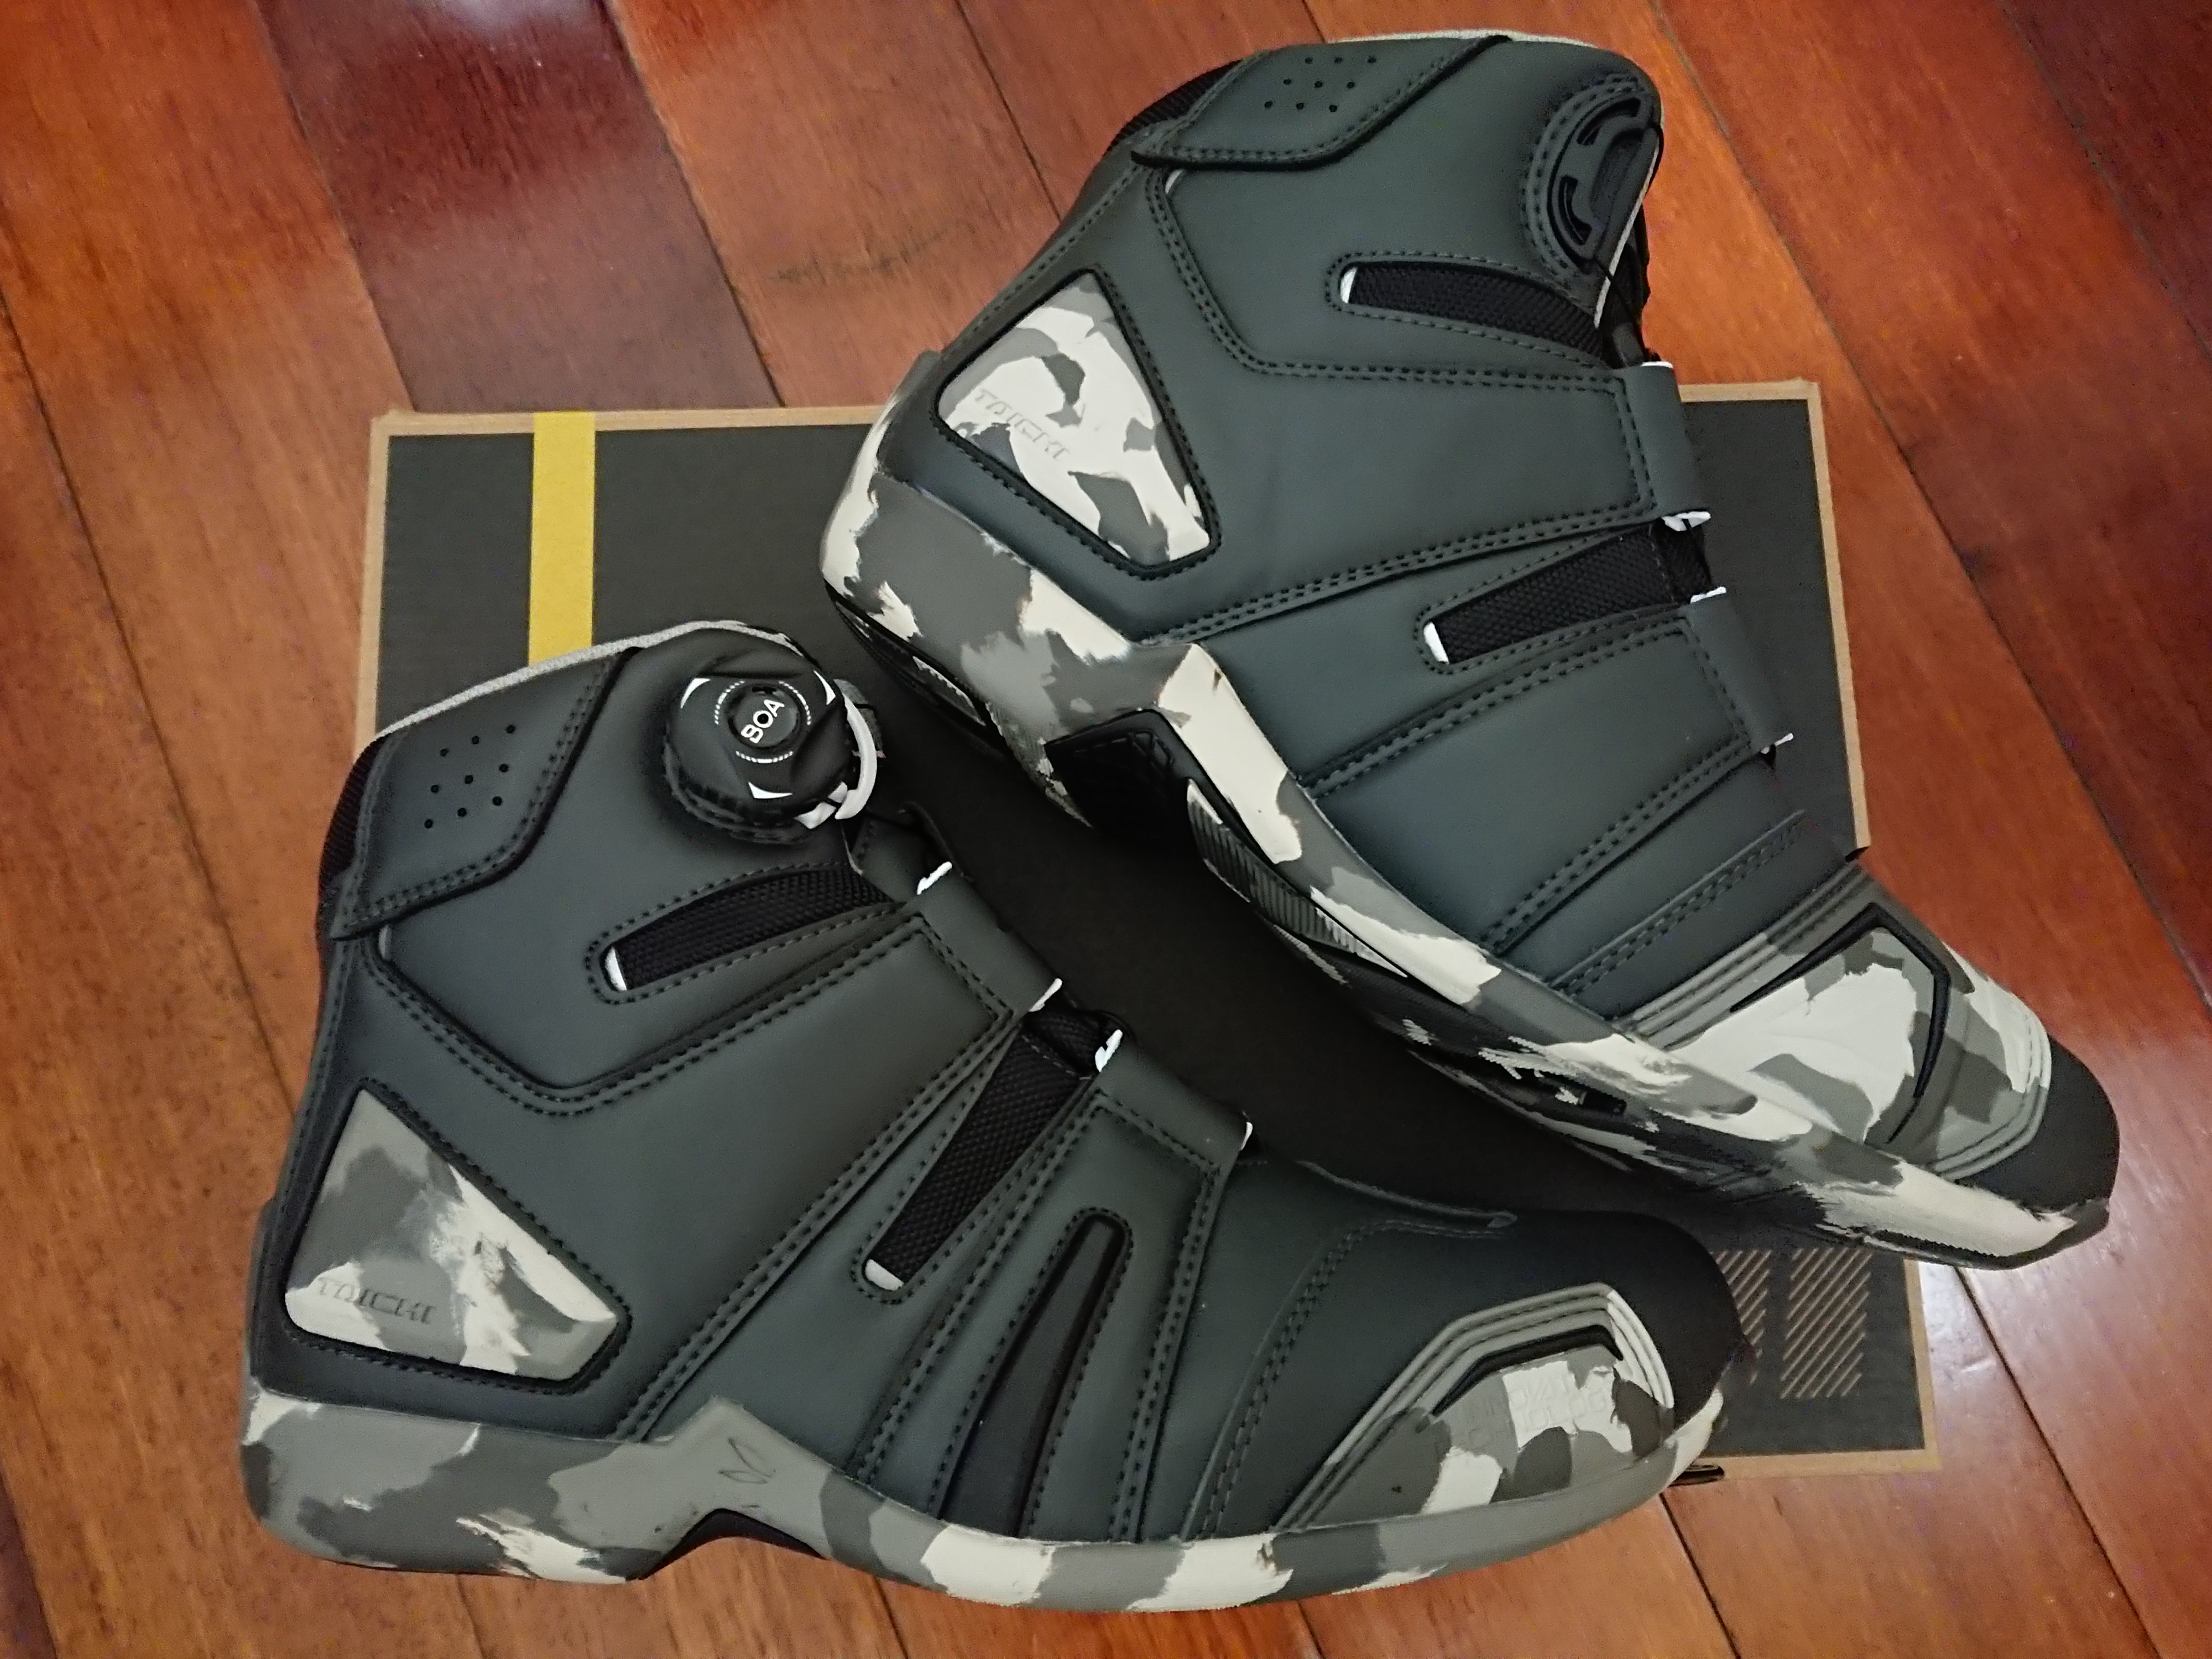 RSS006 防水透氣 踝部減震 騎士車靴 (城市迷彩)